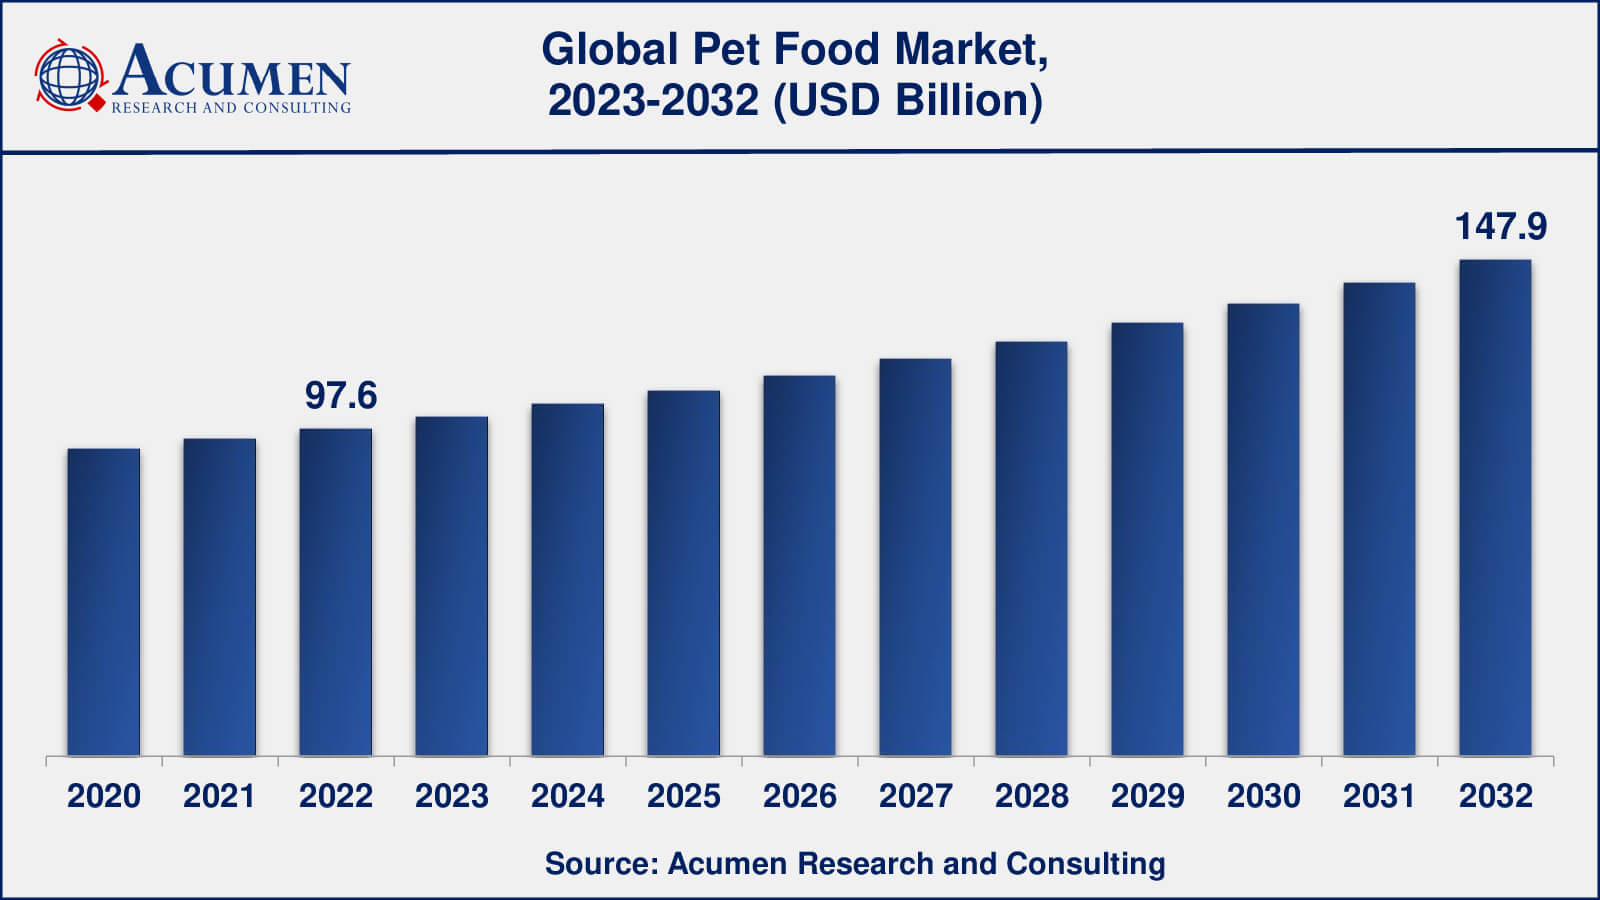 Global Pet Food Market Dynamics